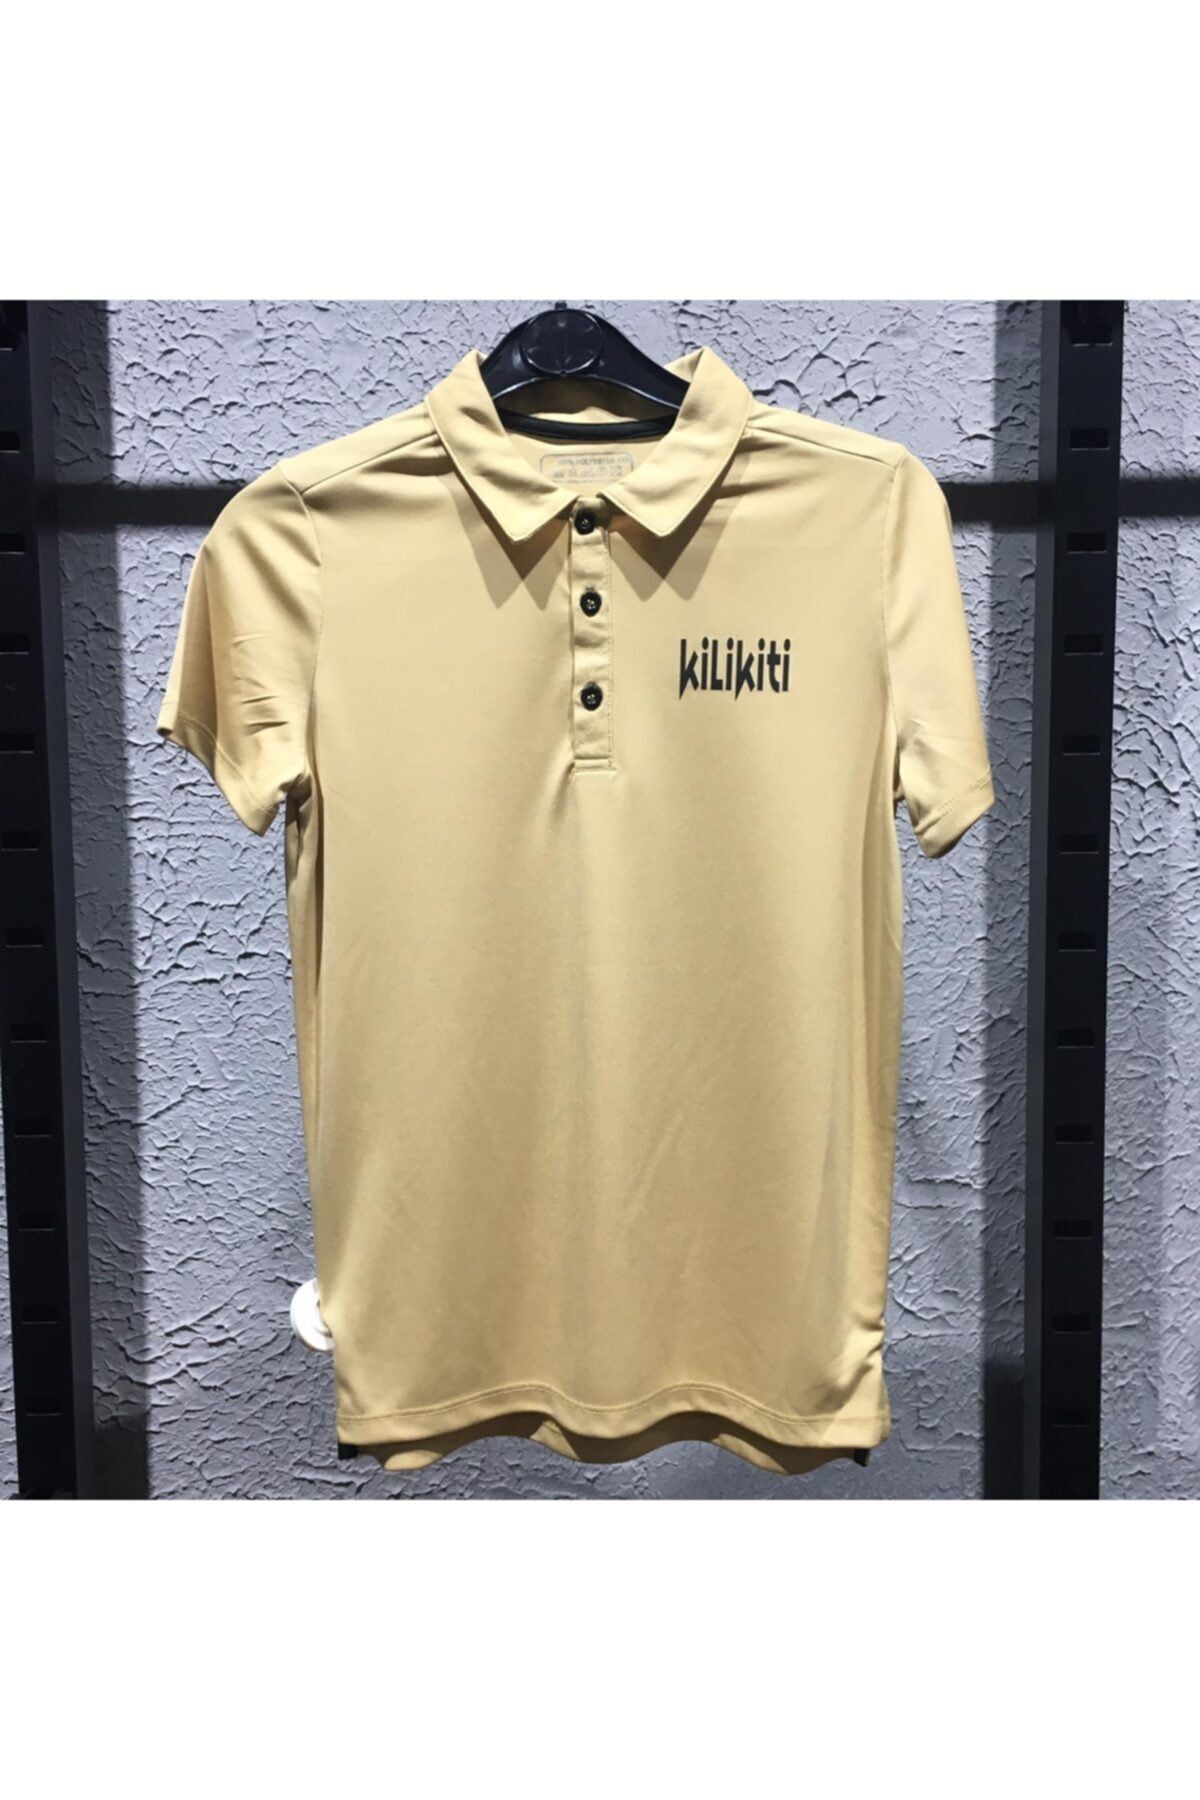 KİLİKİTİ Genç Erkek/ Çocuk Spor T-shirt Polo Yaka Gold